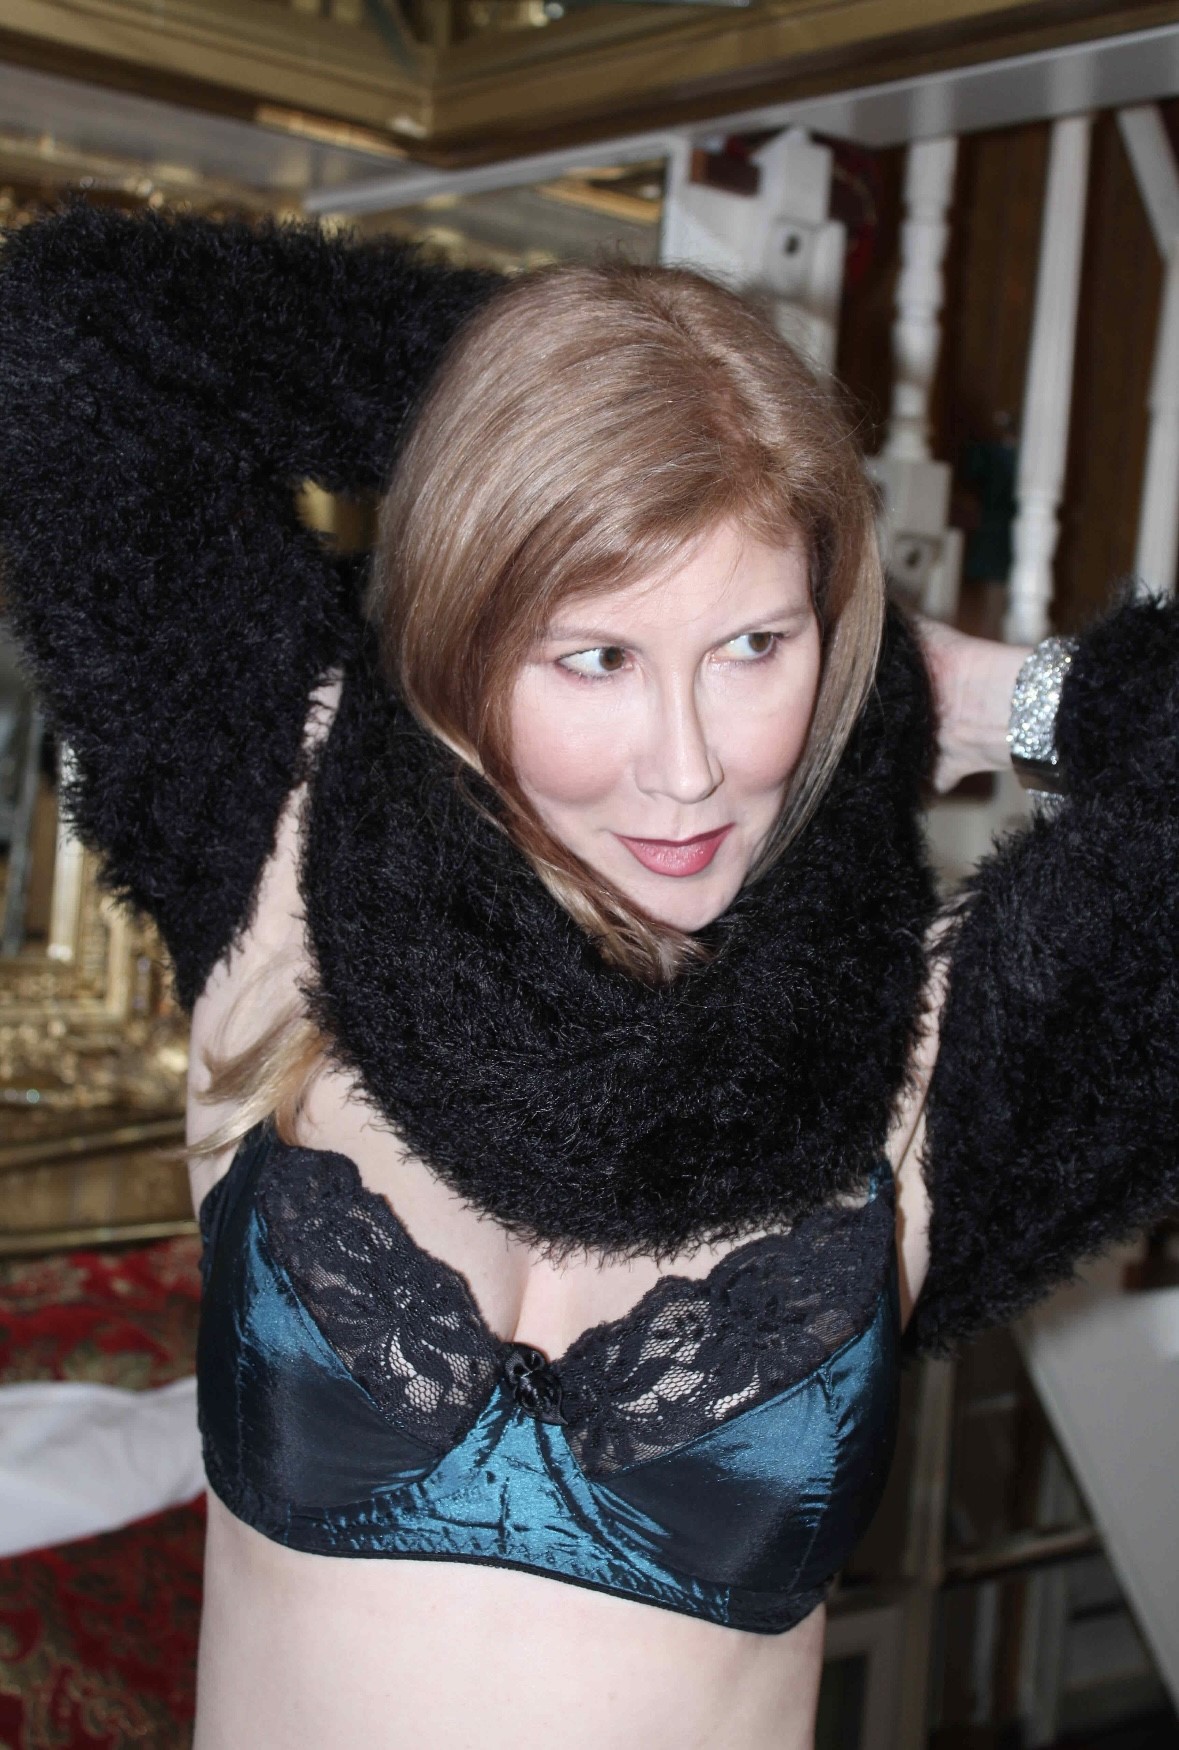 Francesca wearing a dark lacy bra and a black faux fur stole